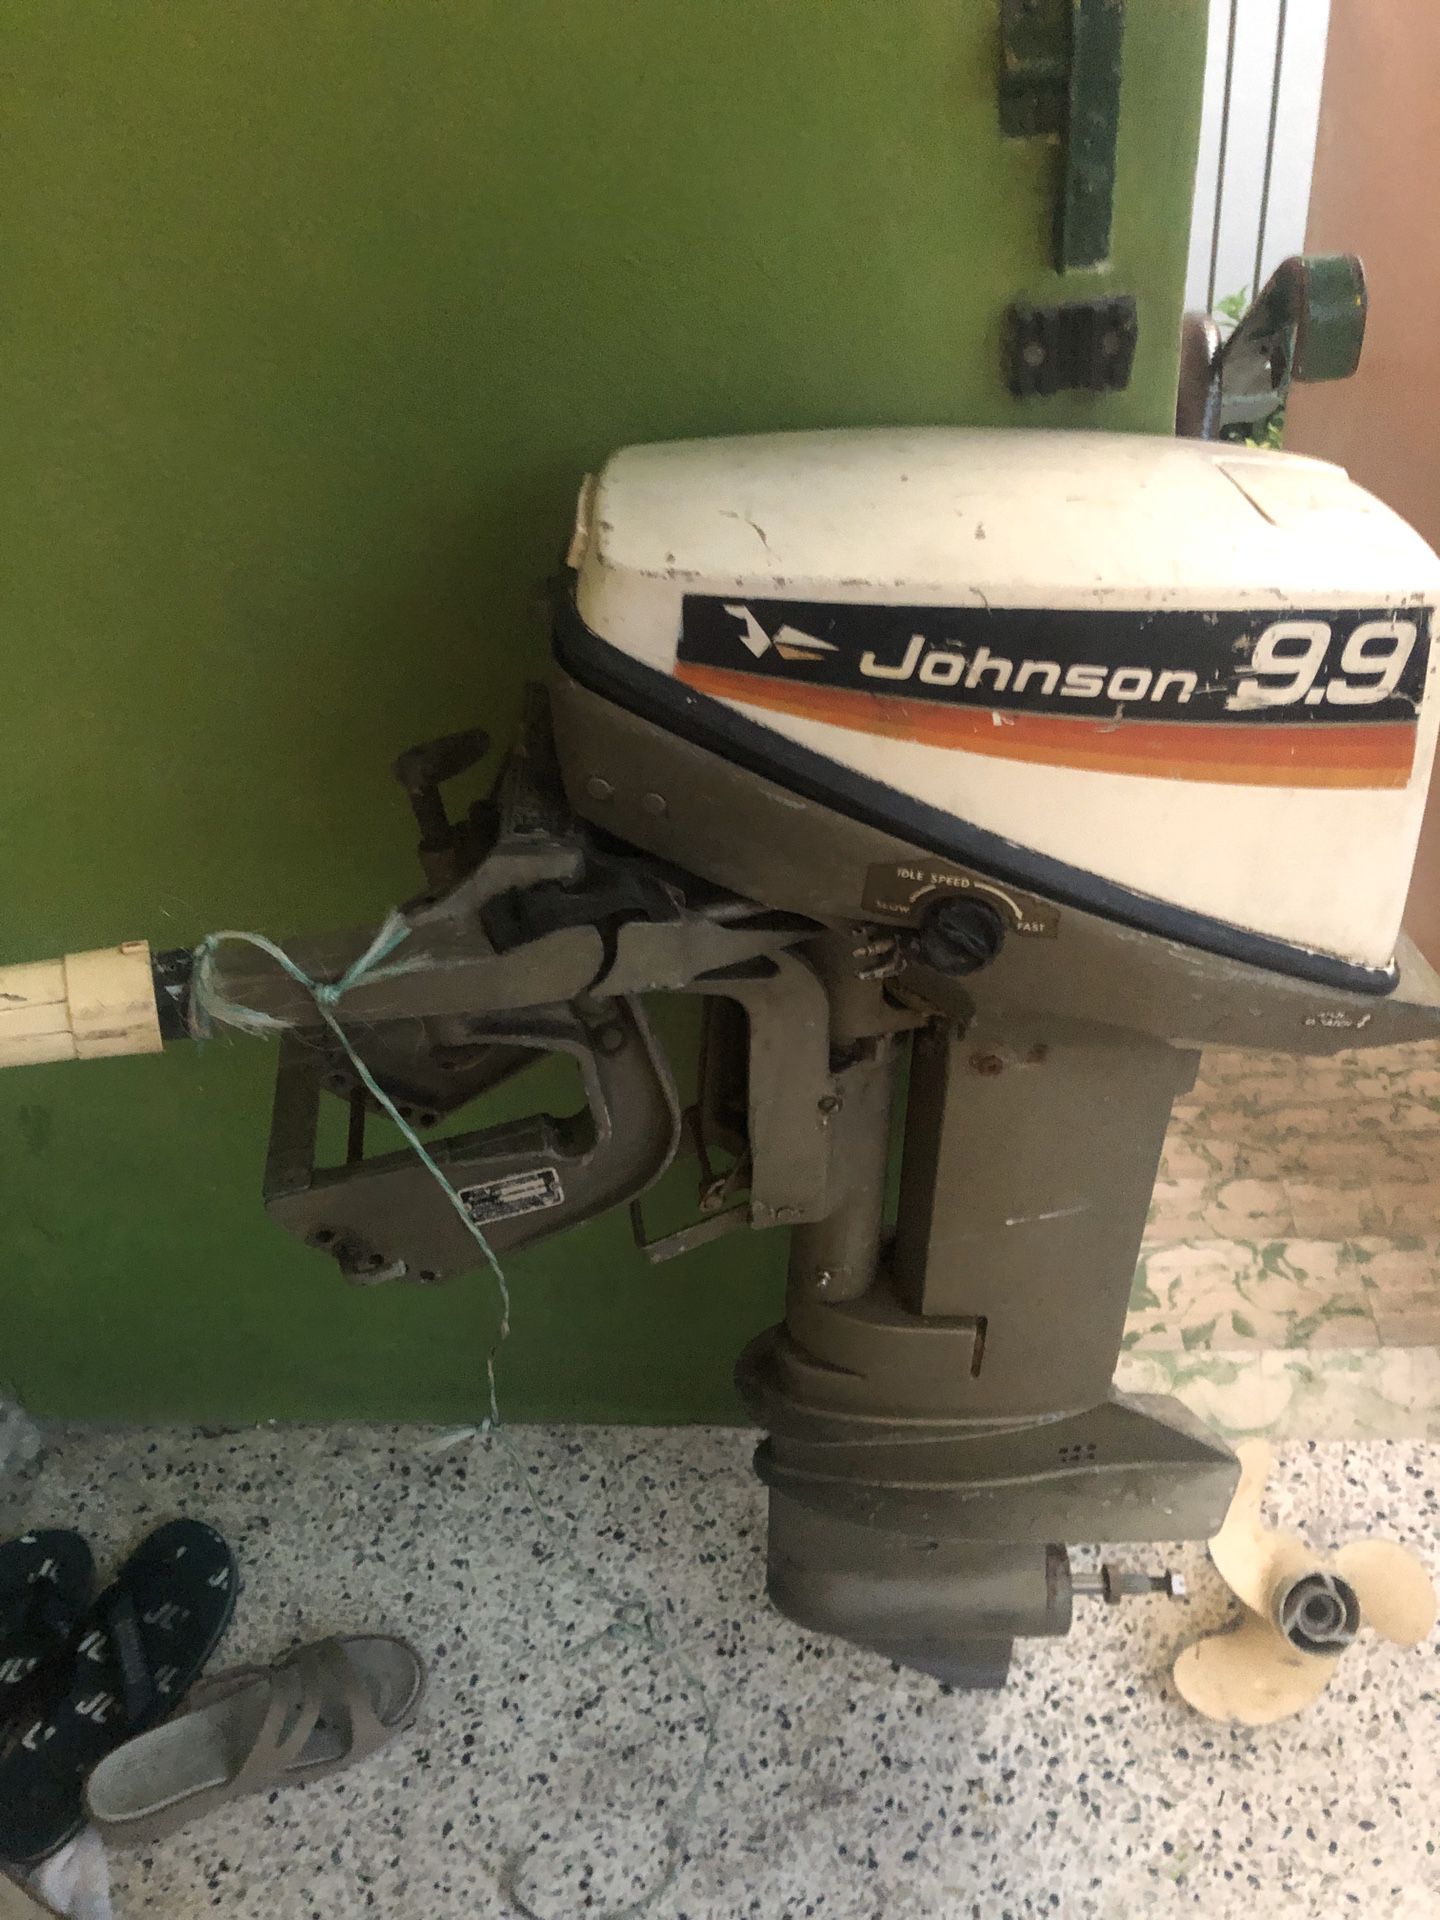 Outboard Johnson engine 9.9 (broken)